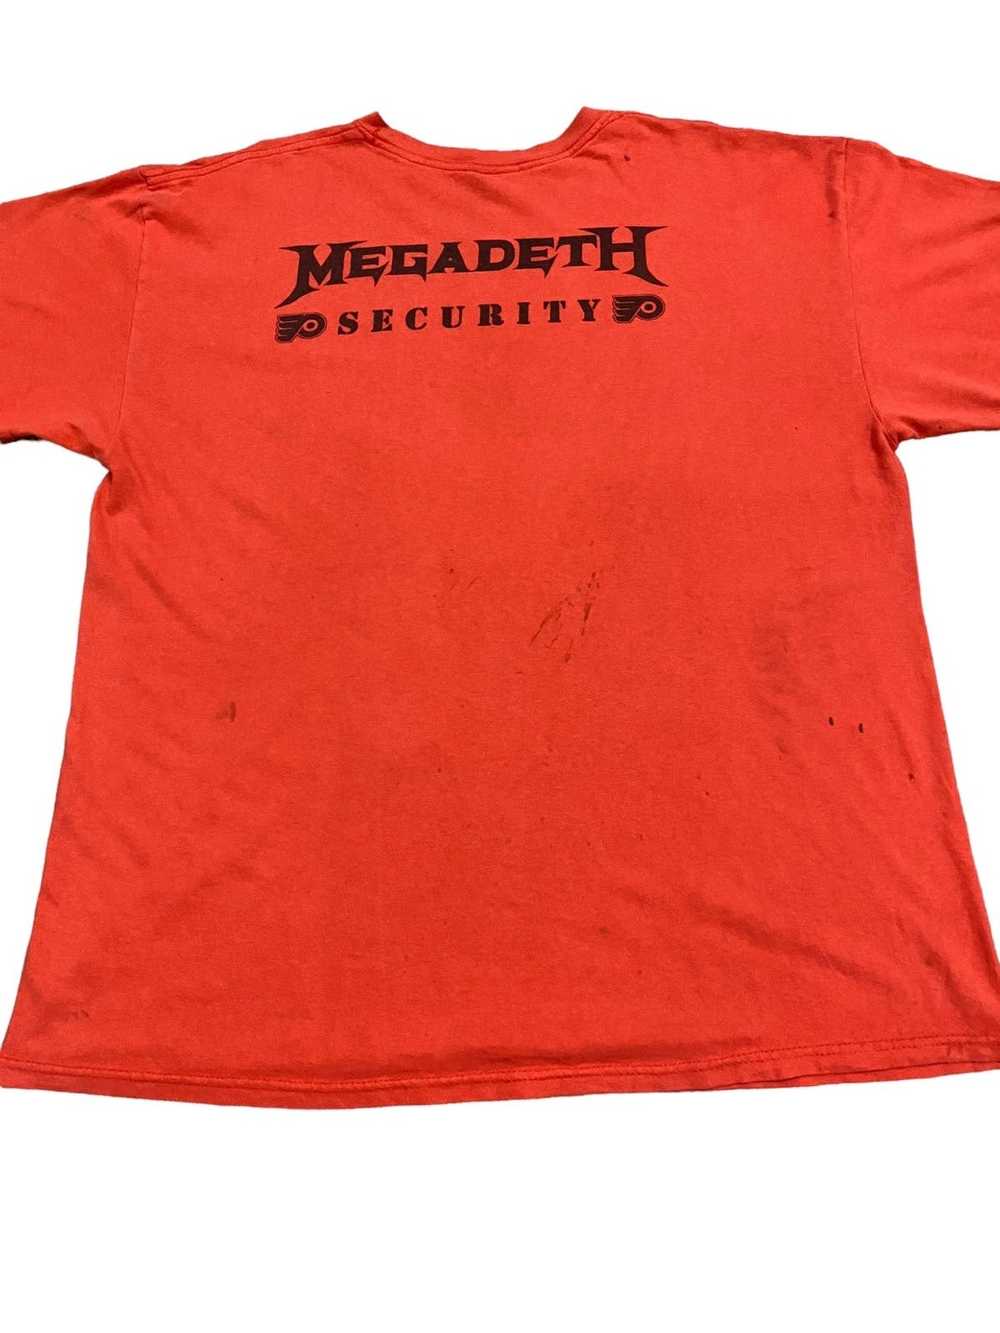 Band Tees × Megadeth Megadeth security shirt - image 3